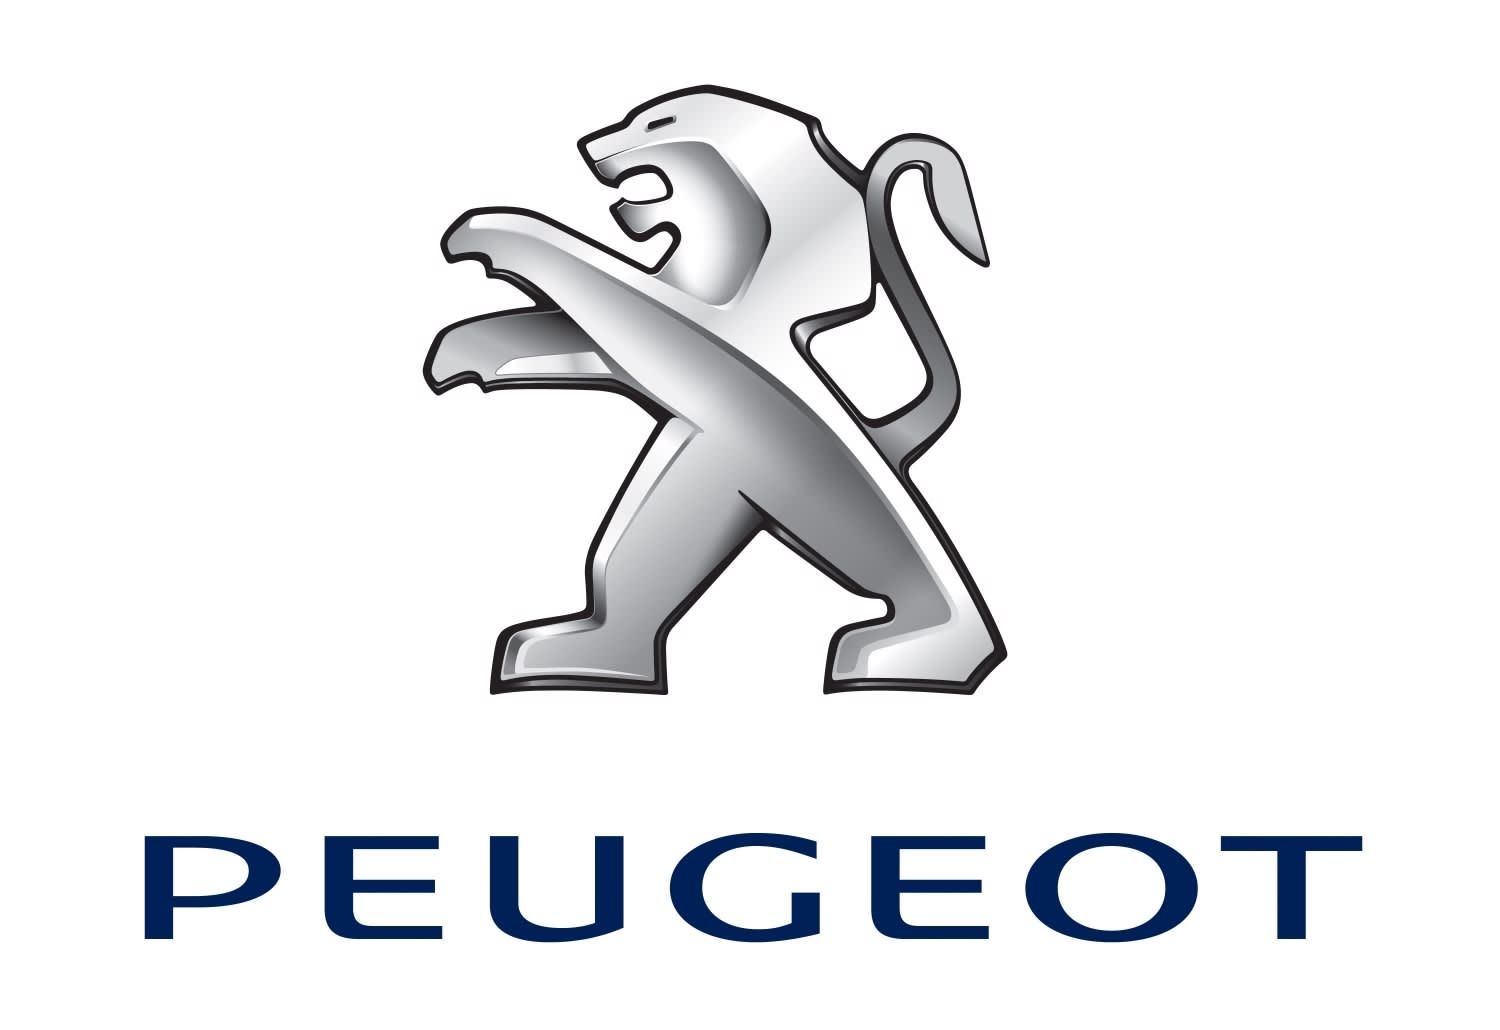 Evolution of the Peugeot Lion - Drive